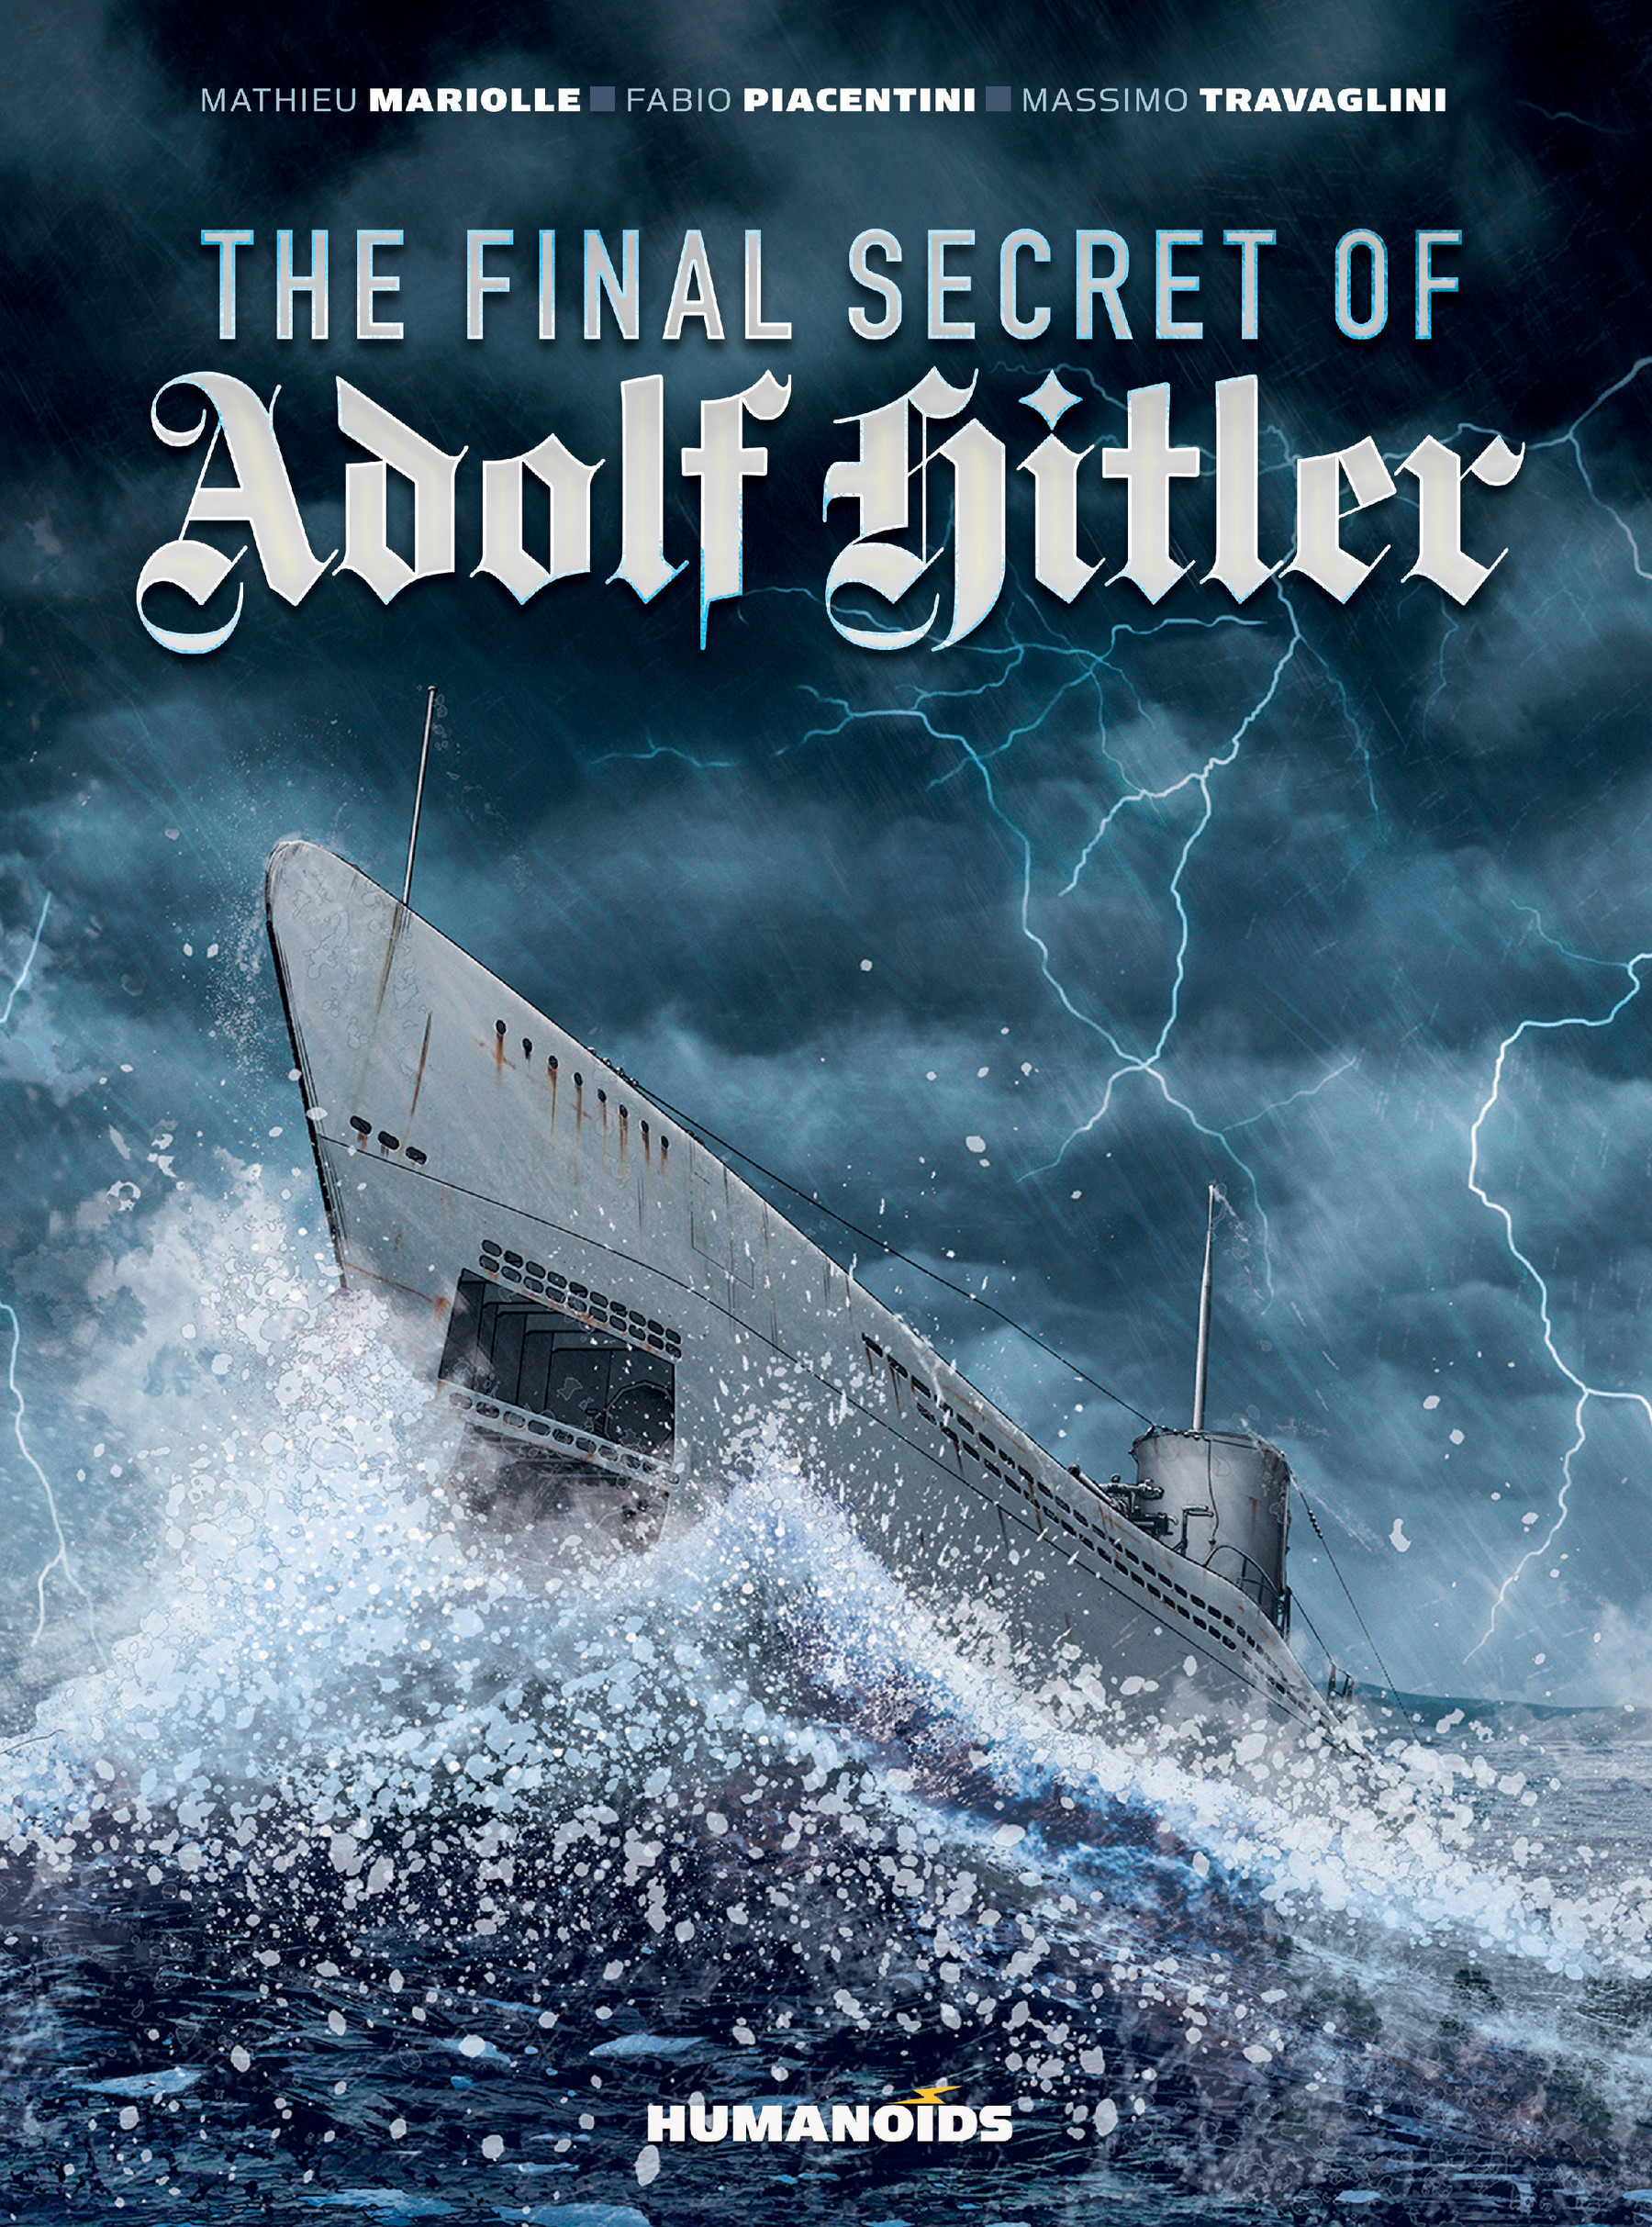 Read online The Final Secret of Adolf Hitler comic -  Issue # TPB - 1